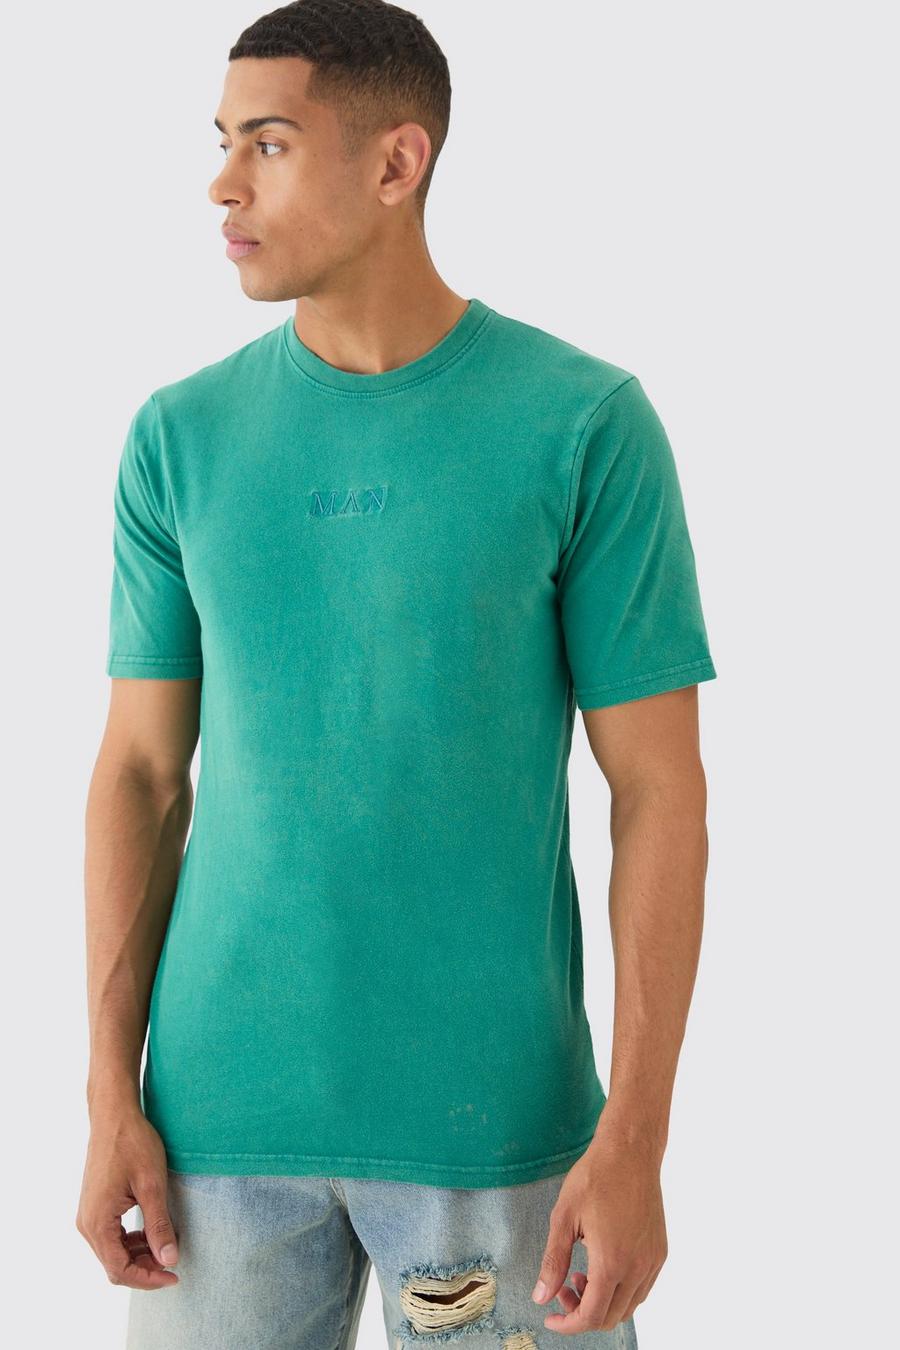 T-shirt a girocollo Man slavata con caratteri romani, Teal